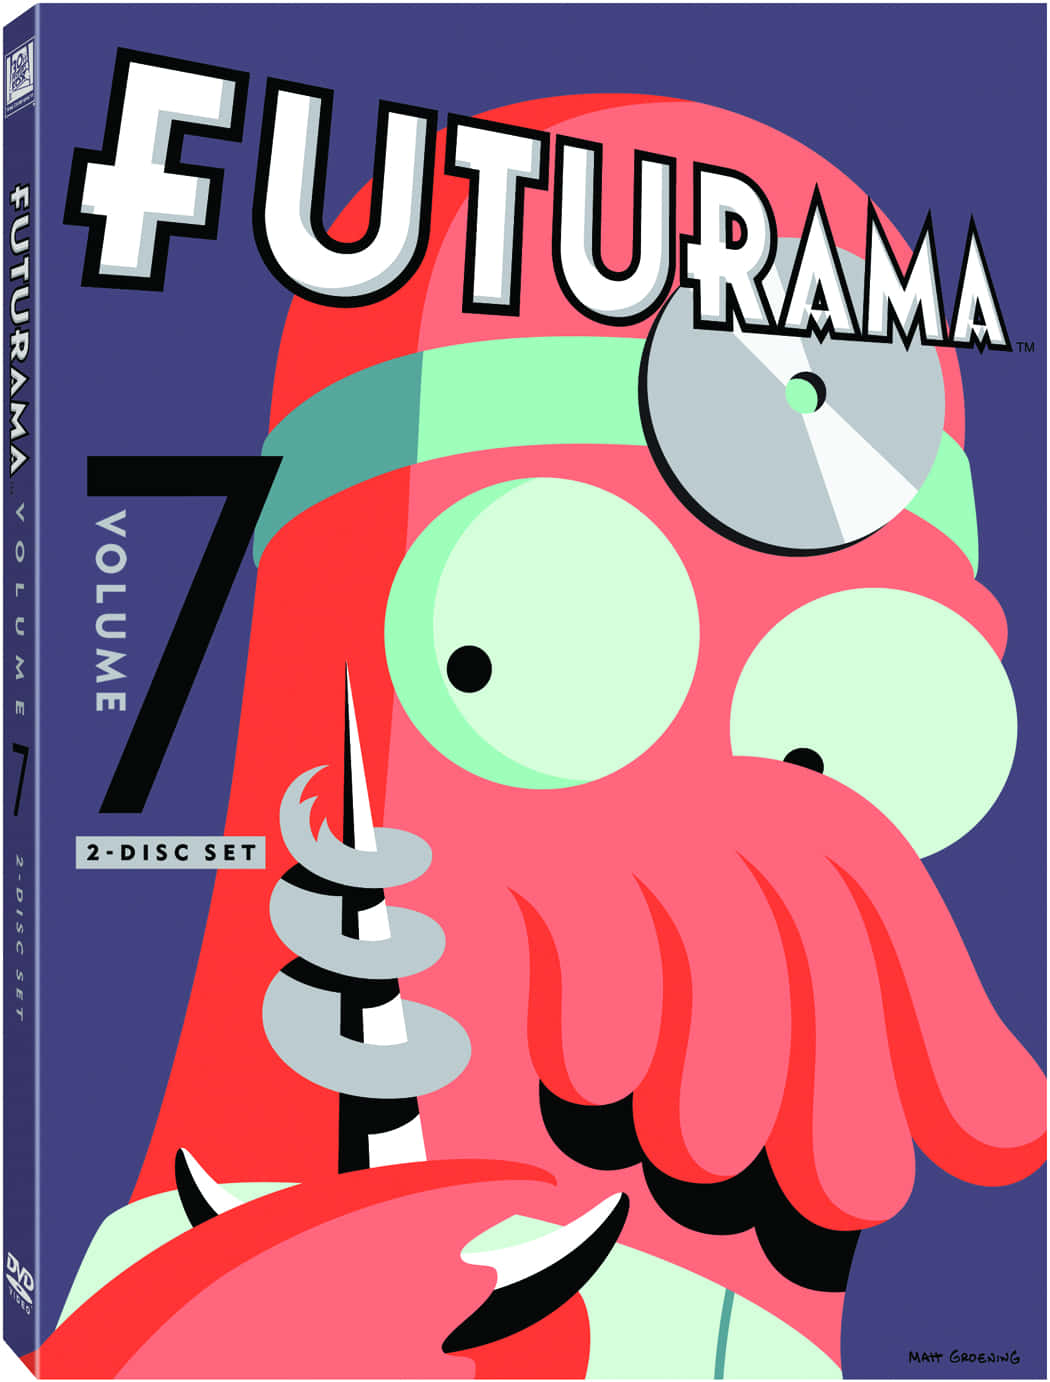 "Back to the Future with Futurama"